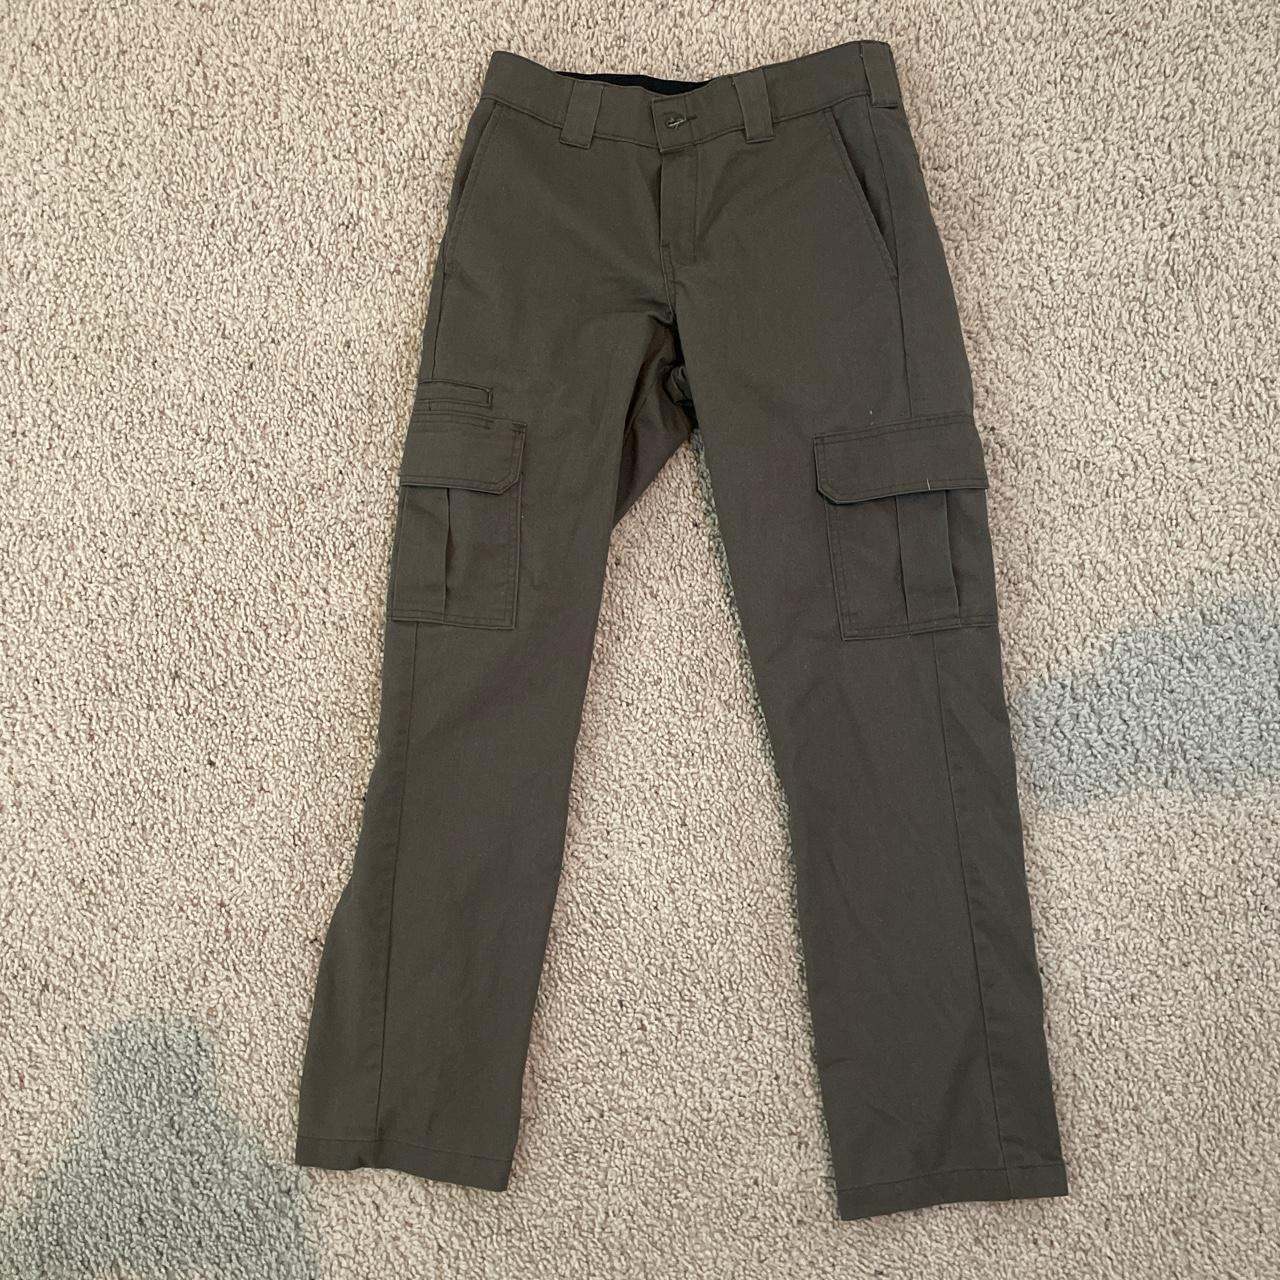 Size 30x32 dickies flex cargo pants - Depop